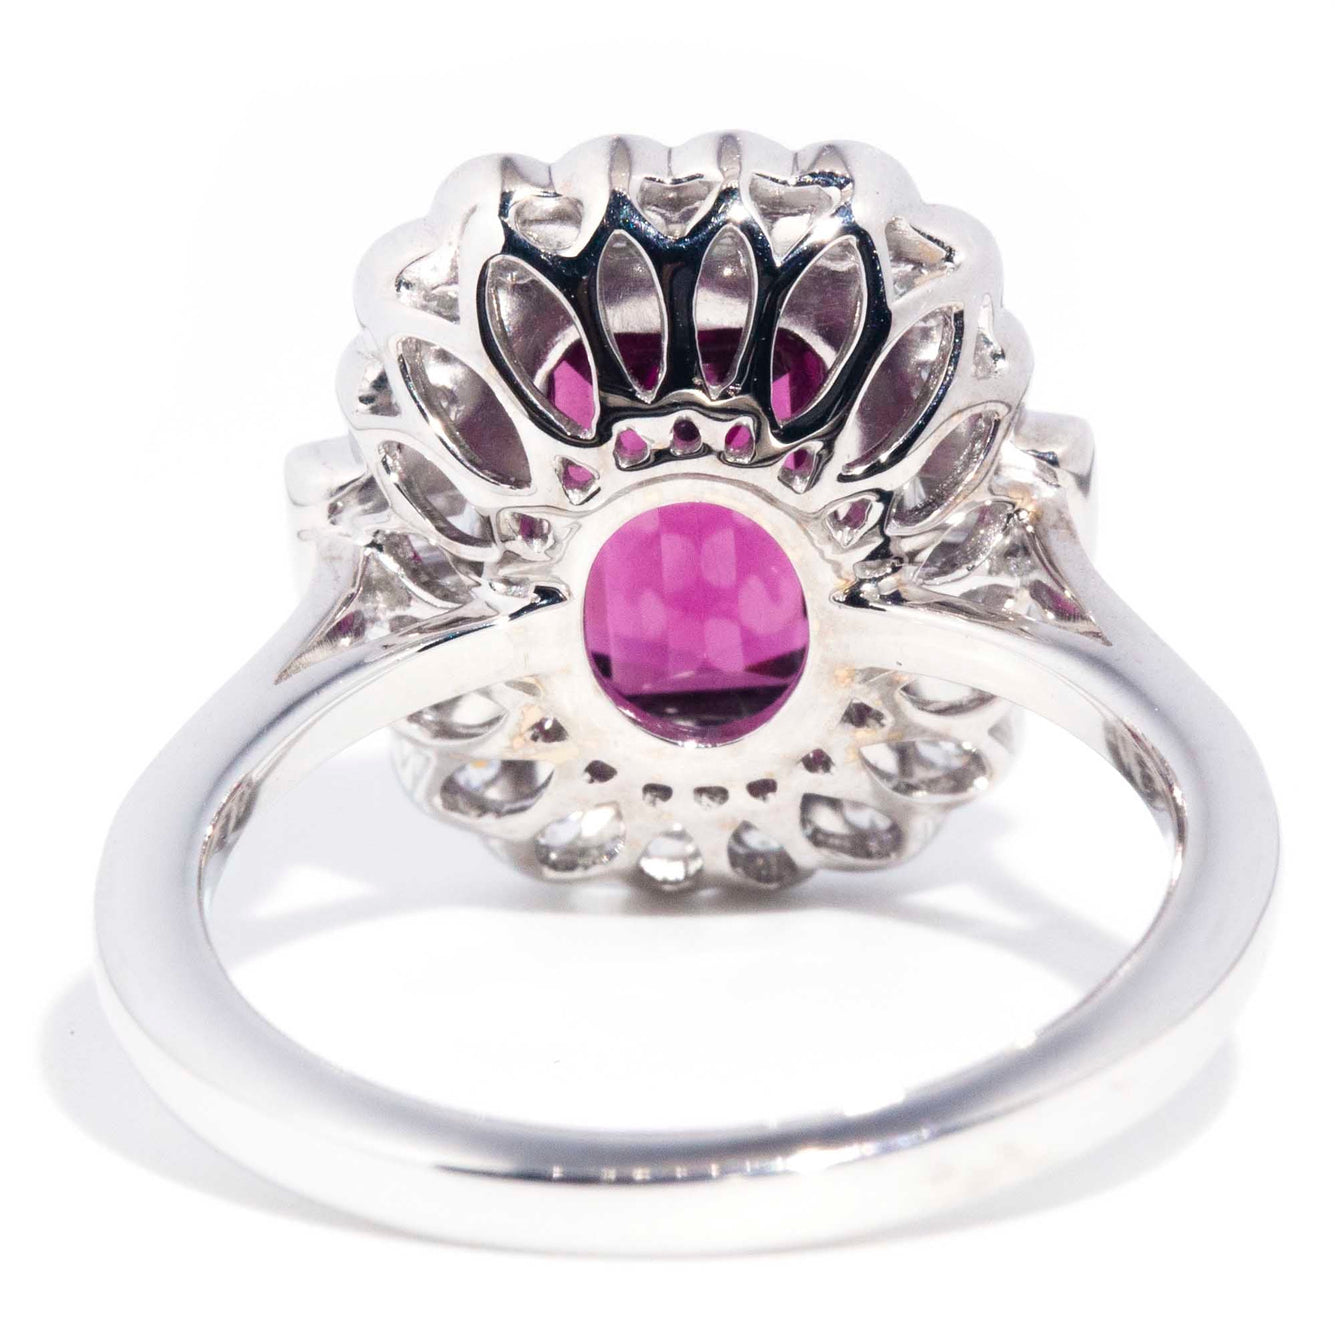 Hazel 2.77ct Fuchsia Tourmaline & Diamond Scalloped Halo Ring* GTG Rings Imperial Jewellery 